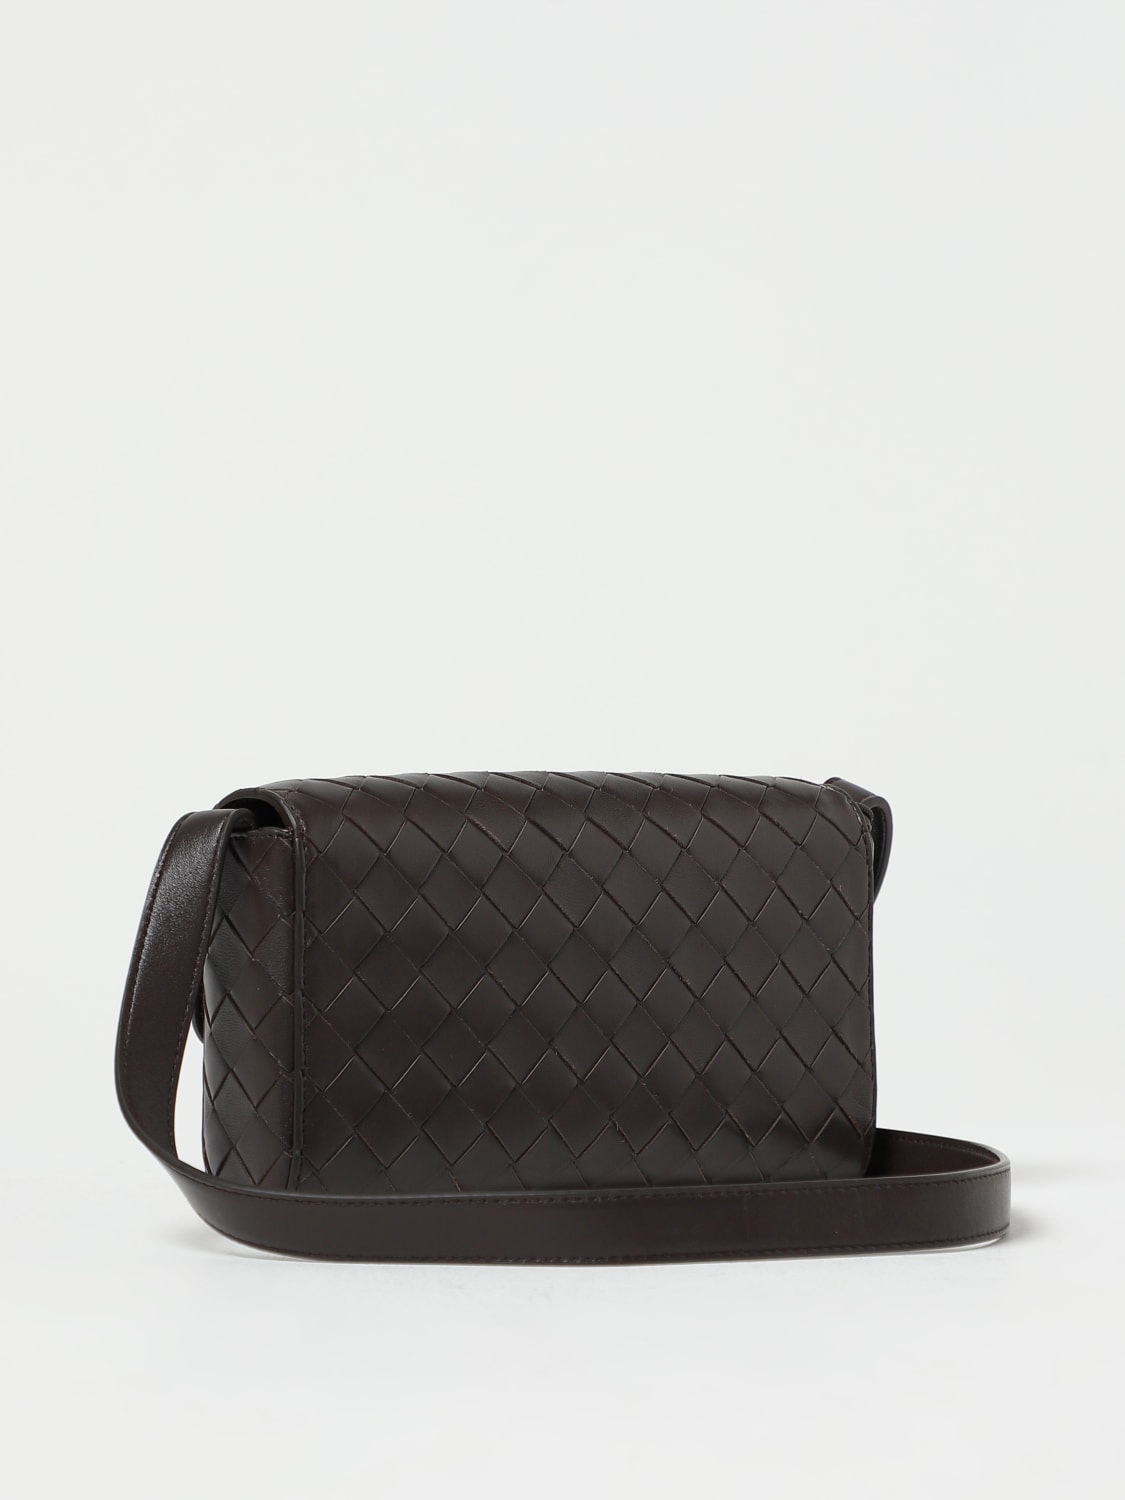 Bottega Veneta Intrecciato Woven Nappa Leather Flap Shoulder Bag